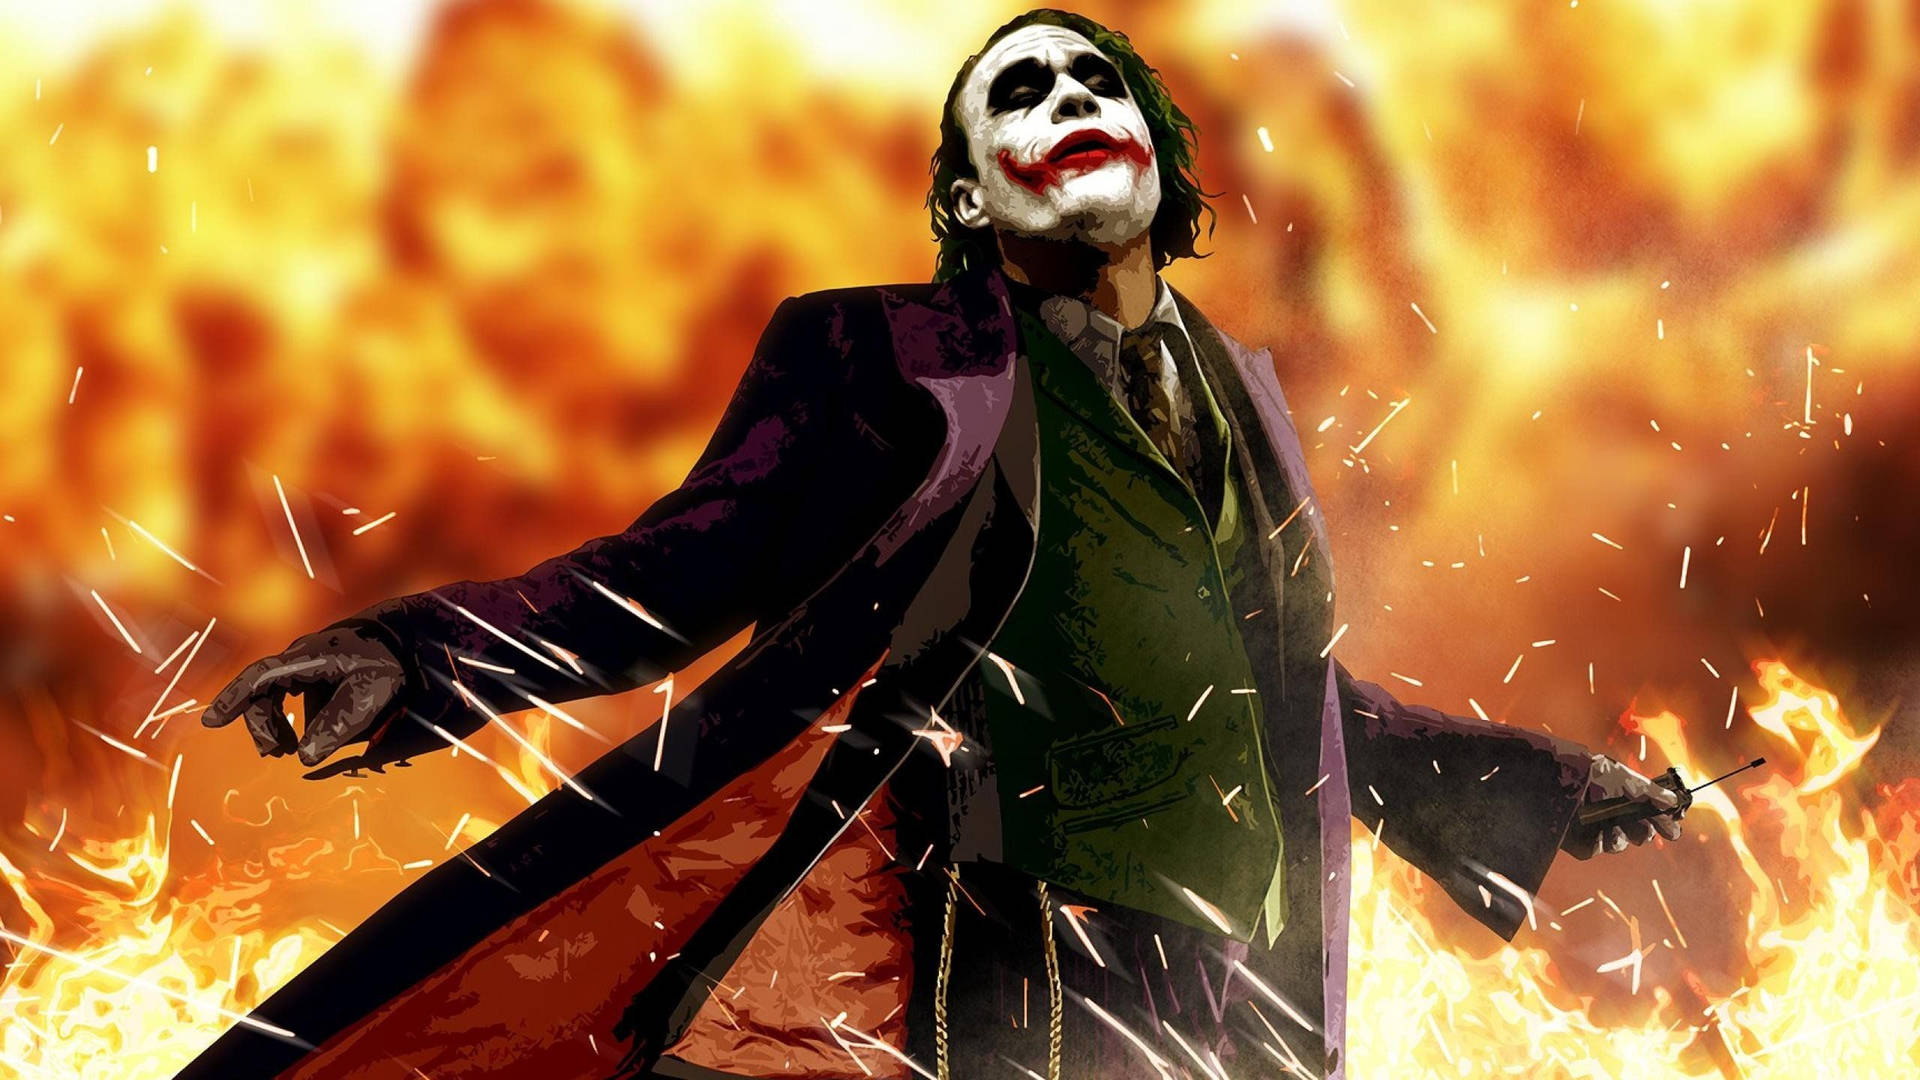 Joker On Fire Wallpaper